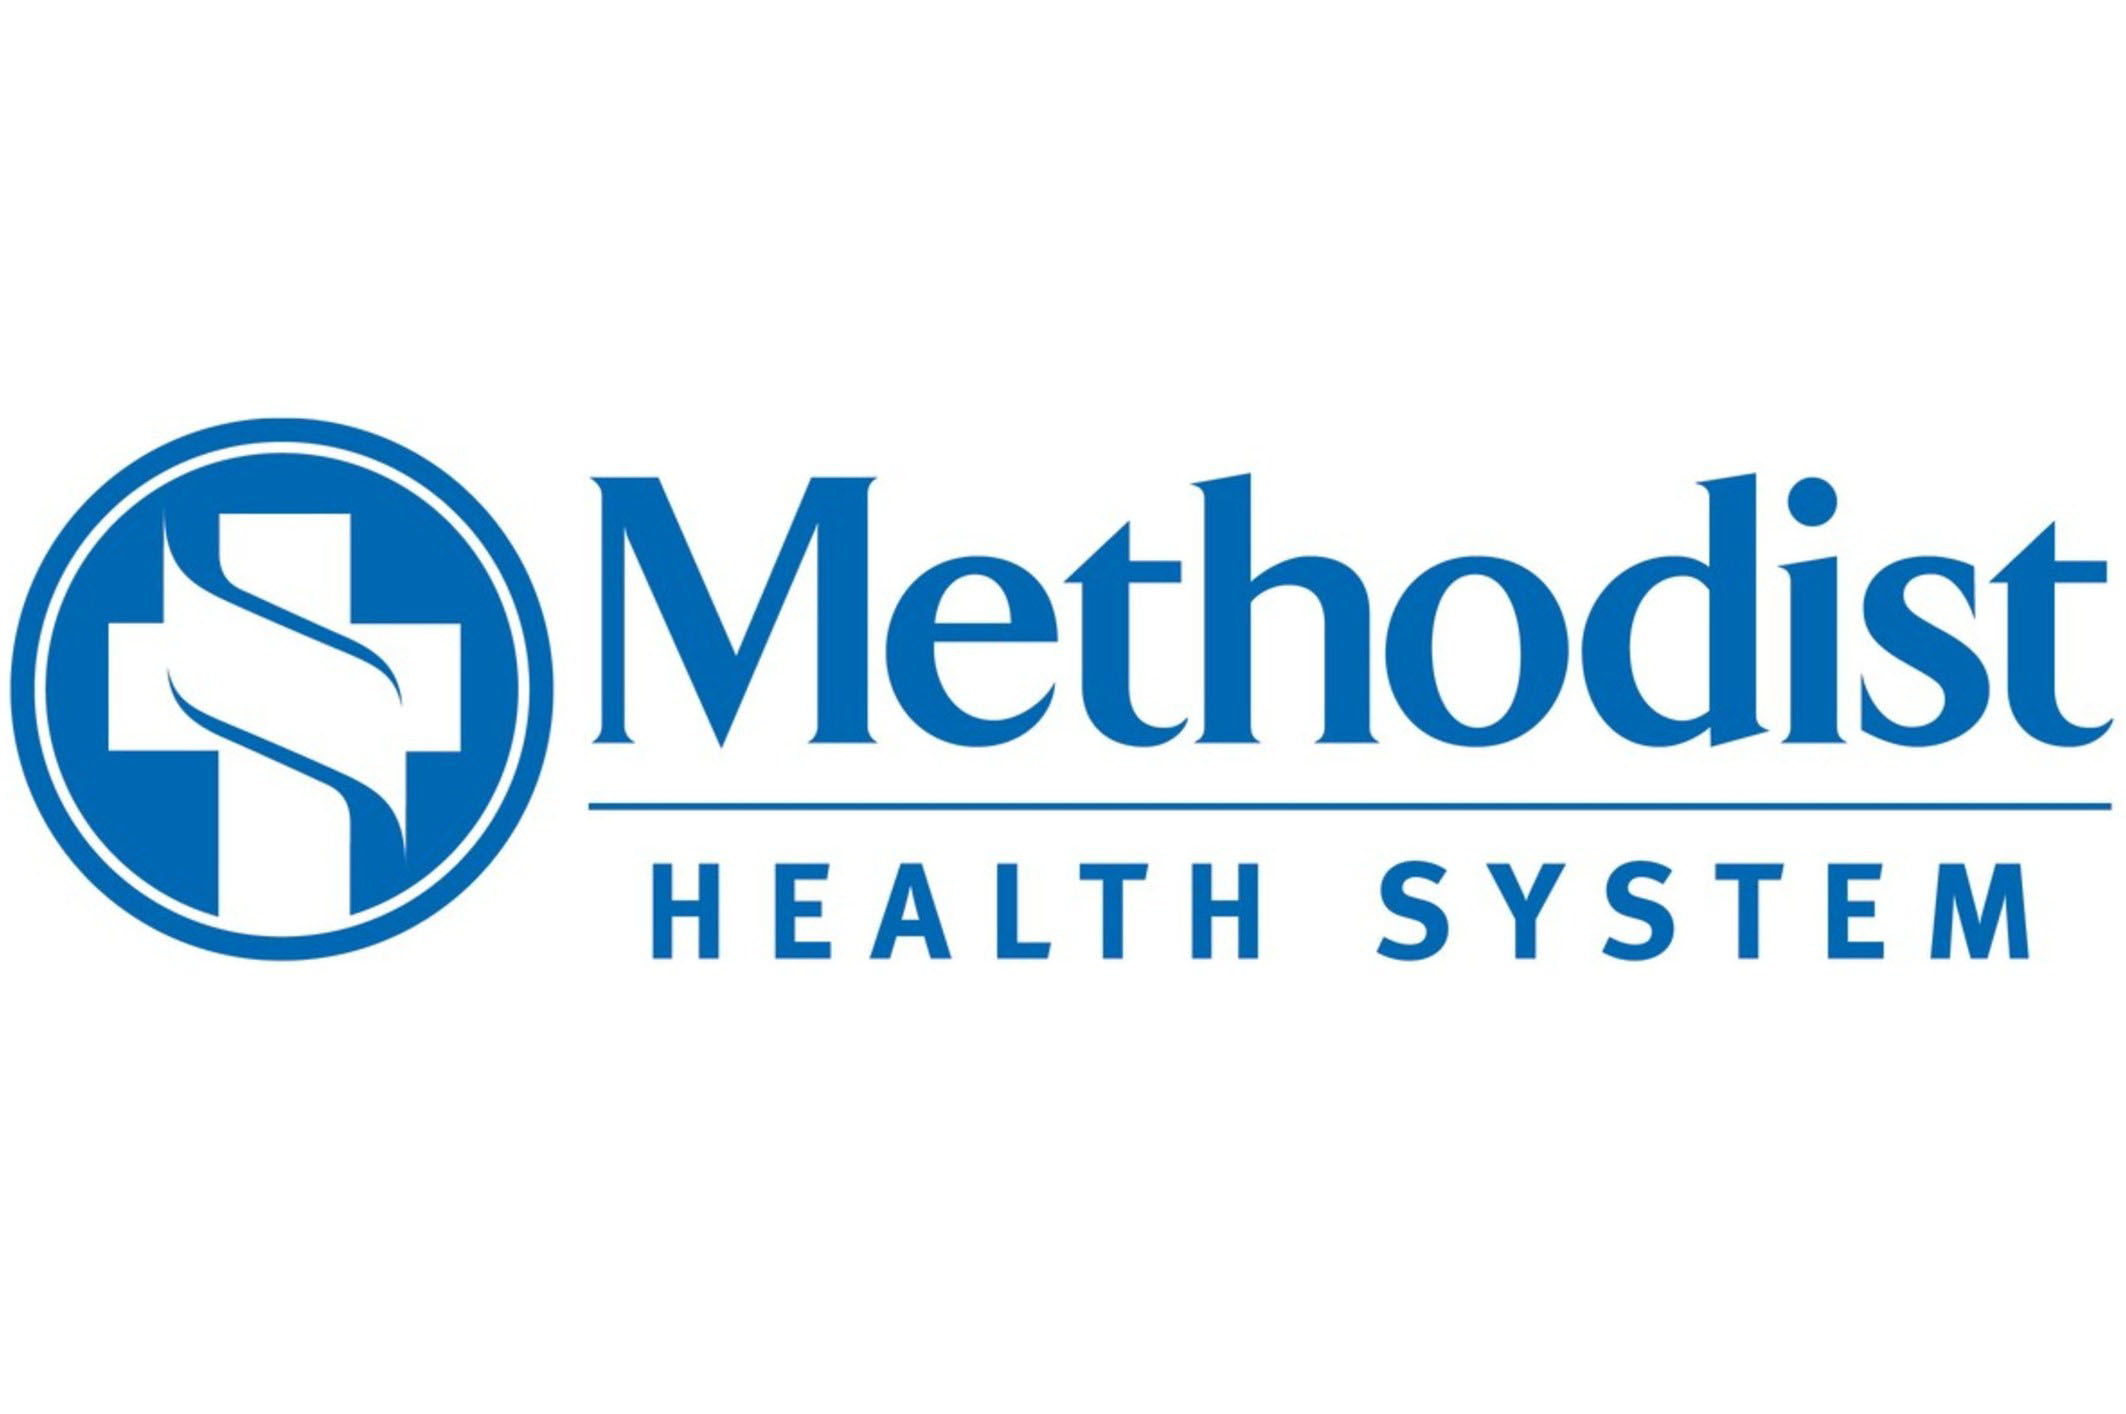 Methodist Health System